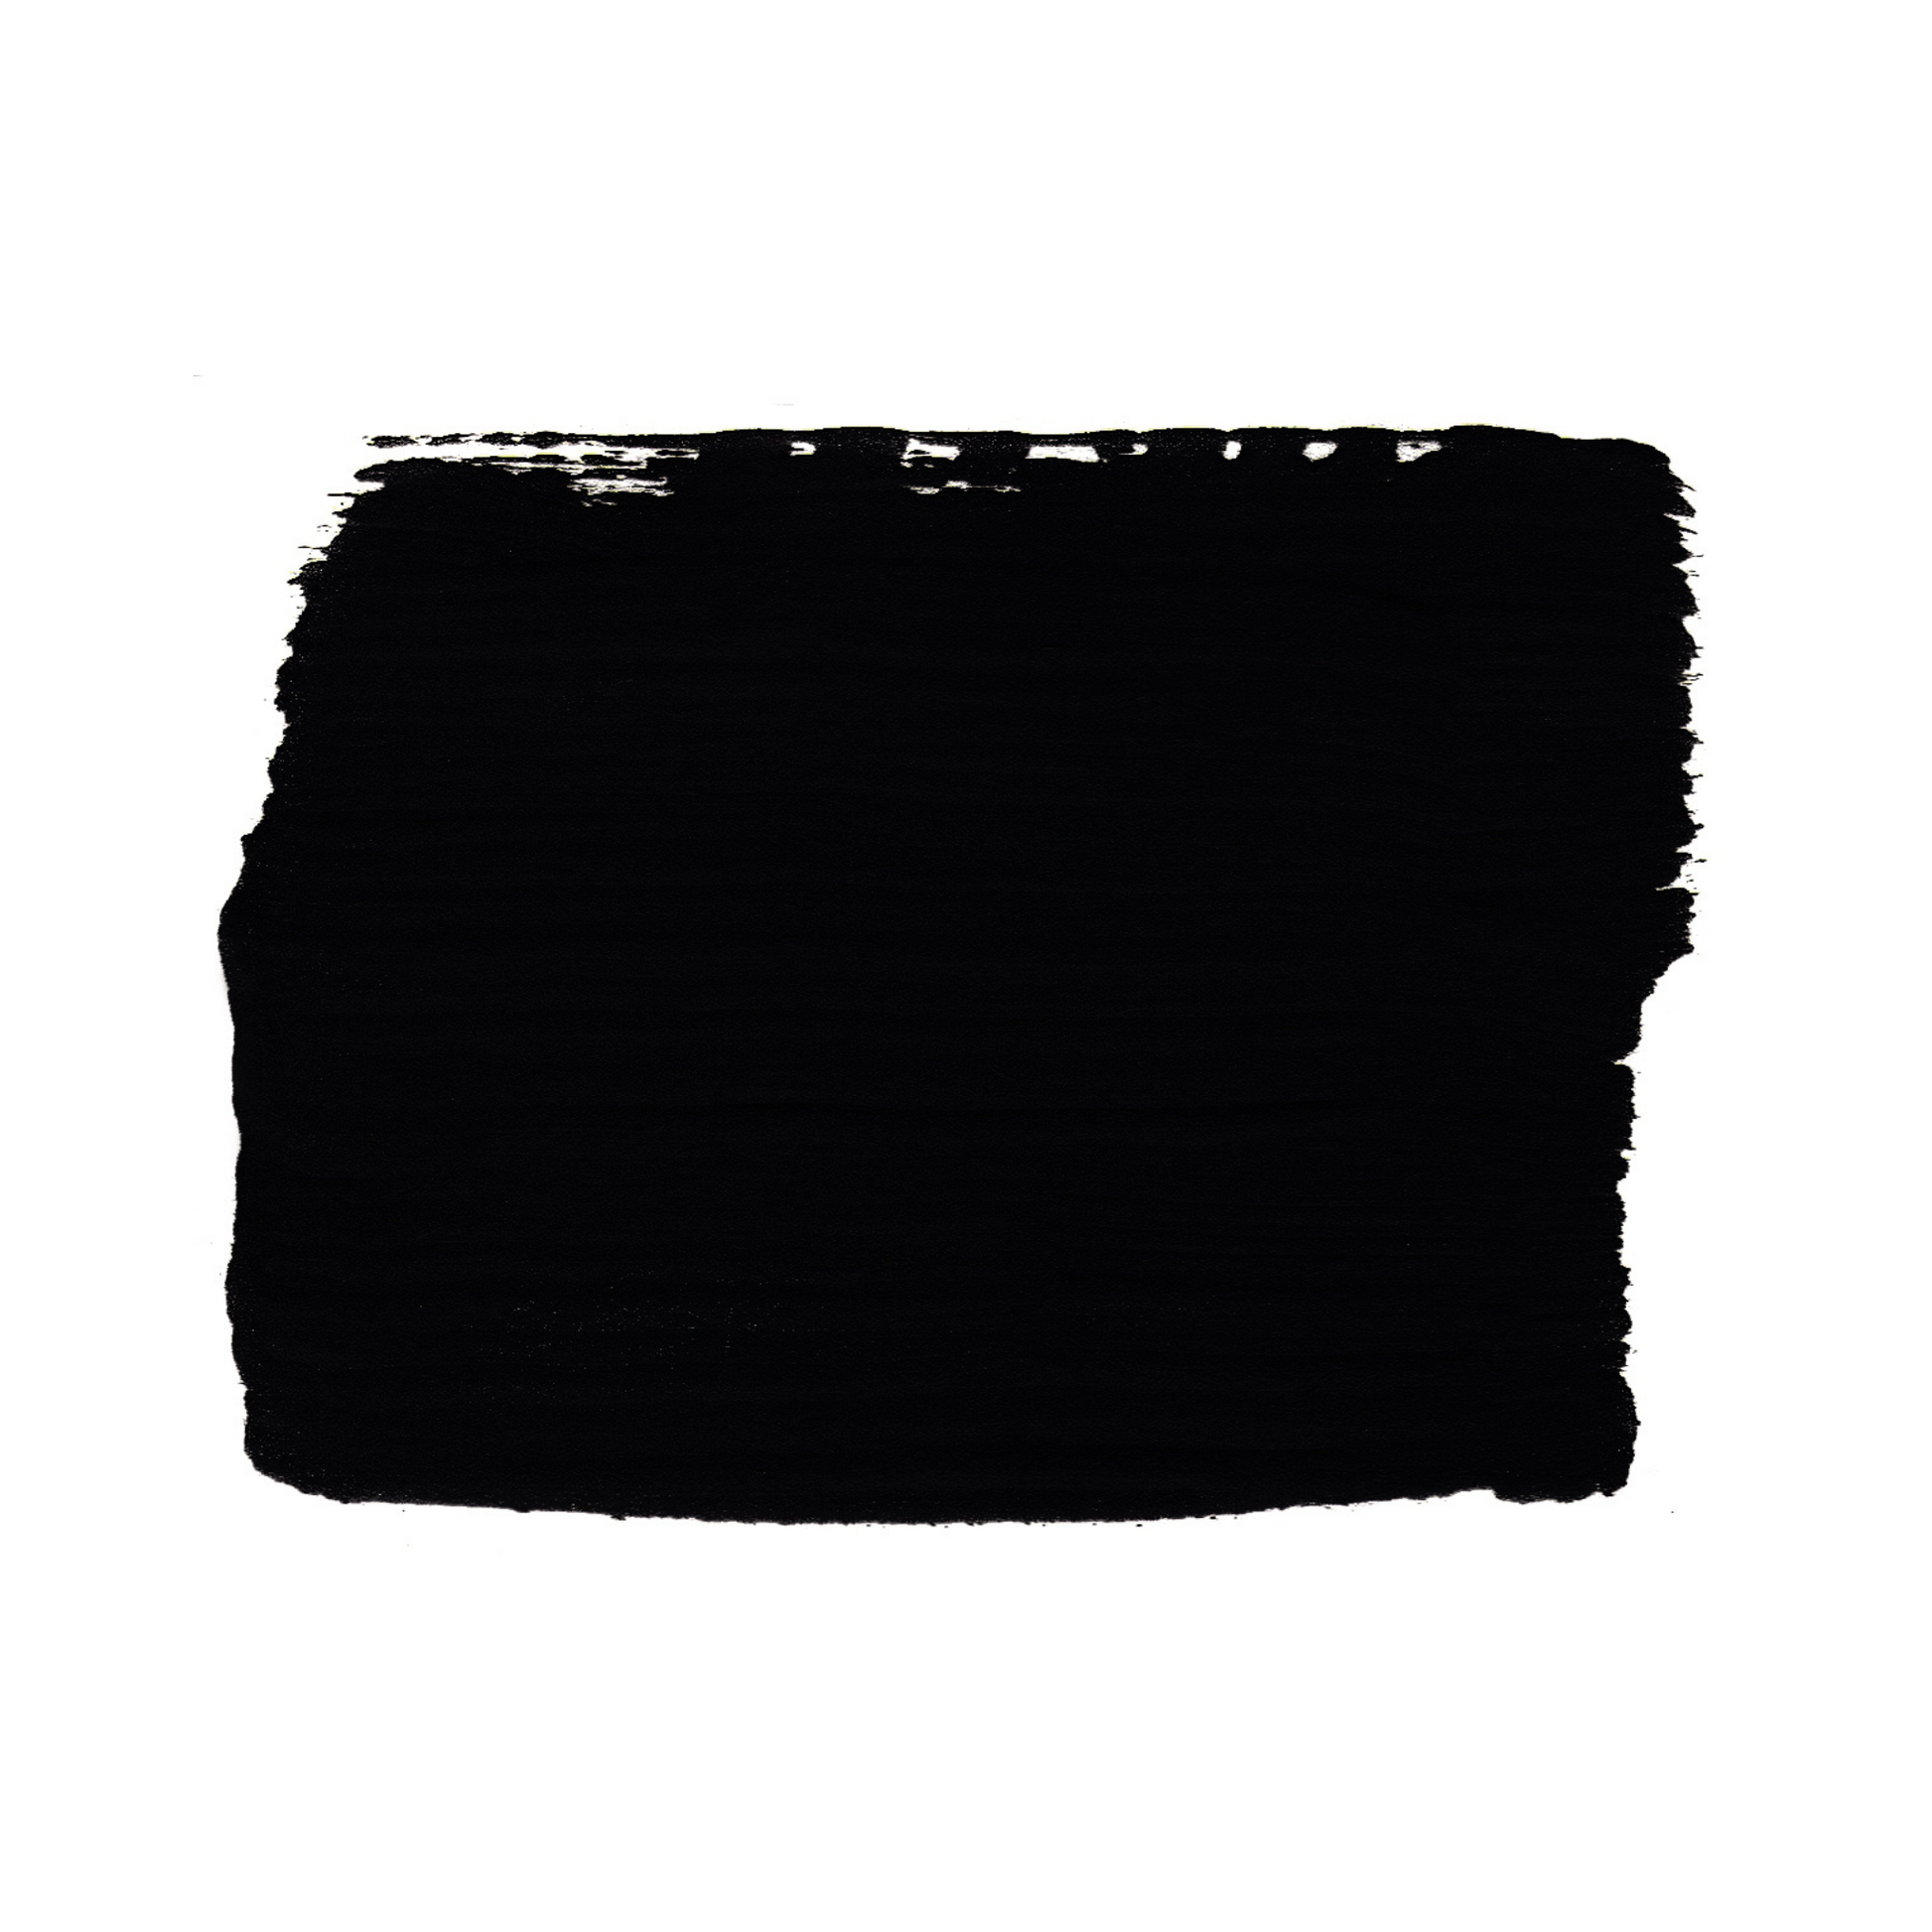 Swatch of athenian black annie sloan chalk paint